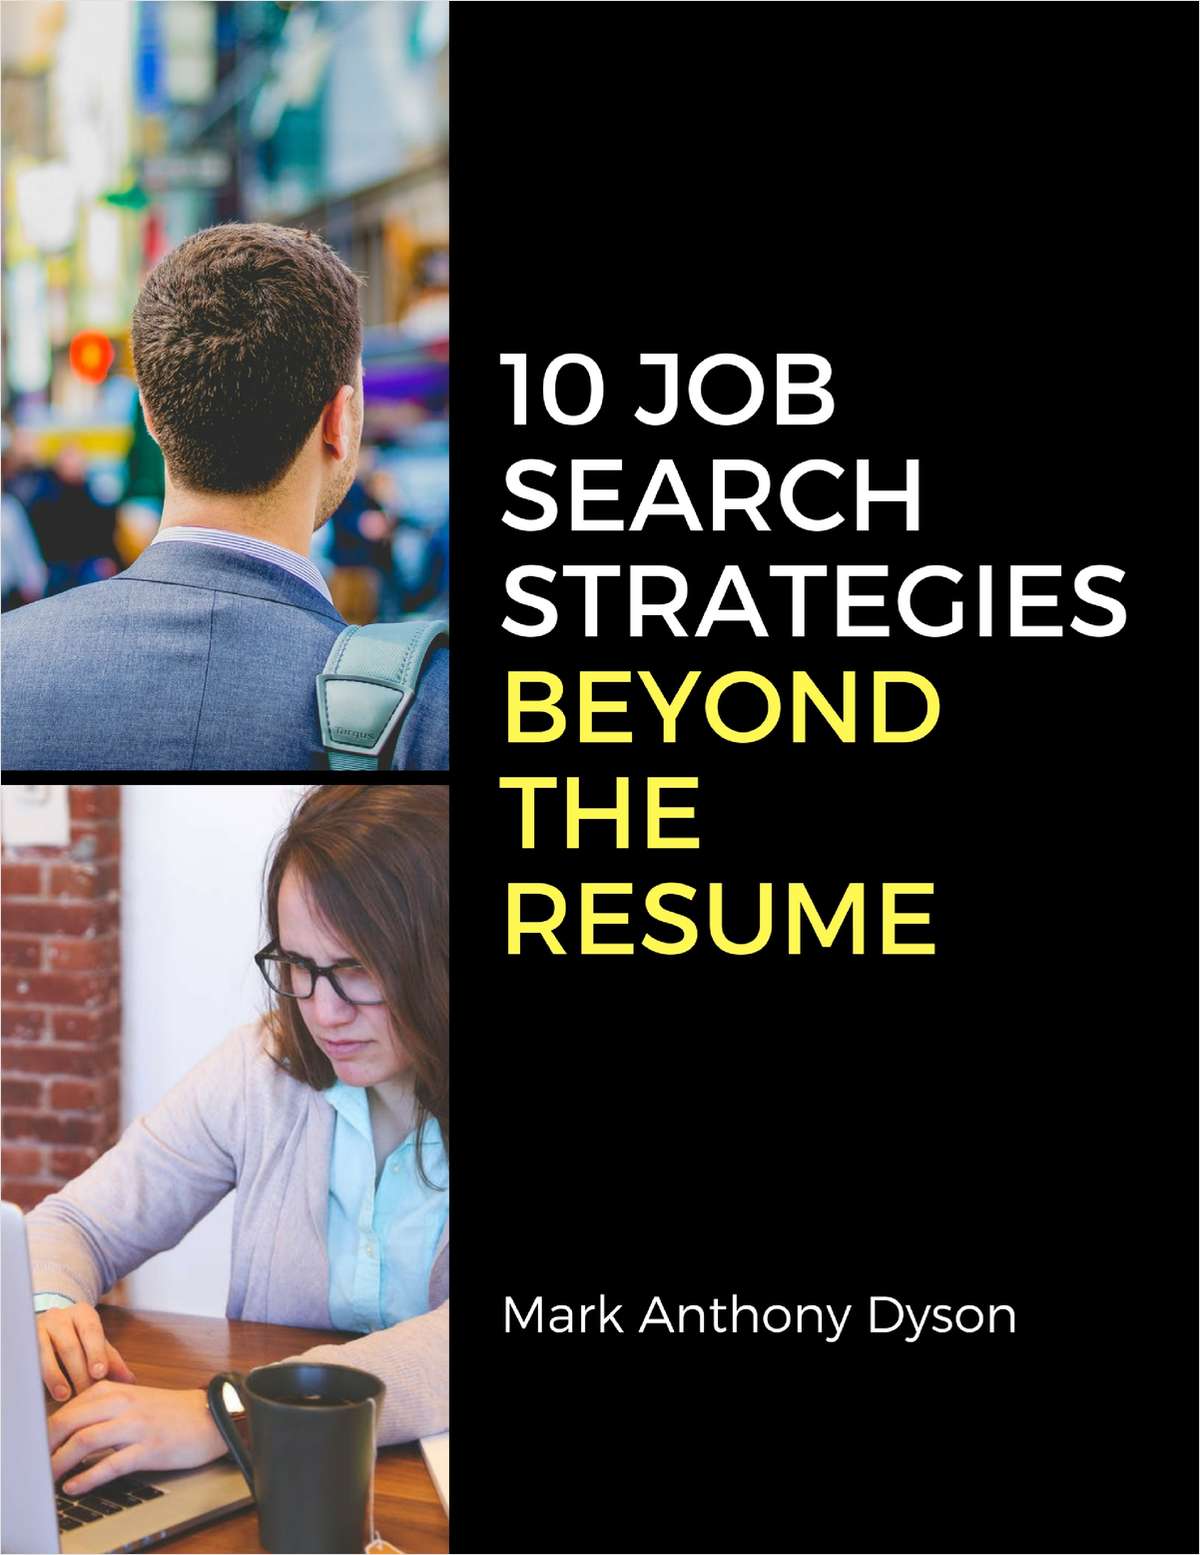 10 Job Search Strategies Beyond the Resume